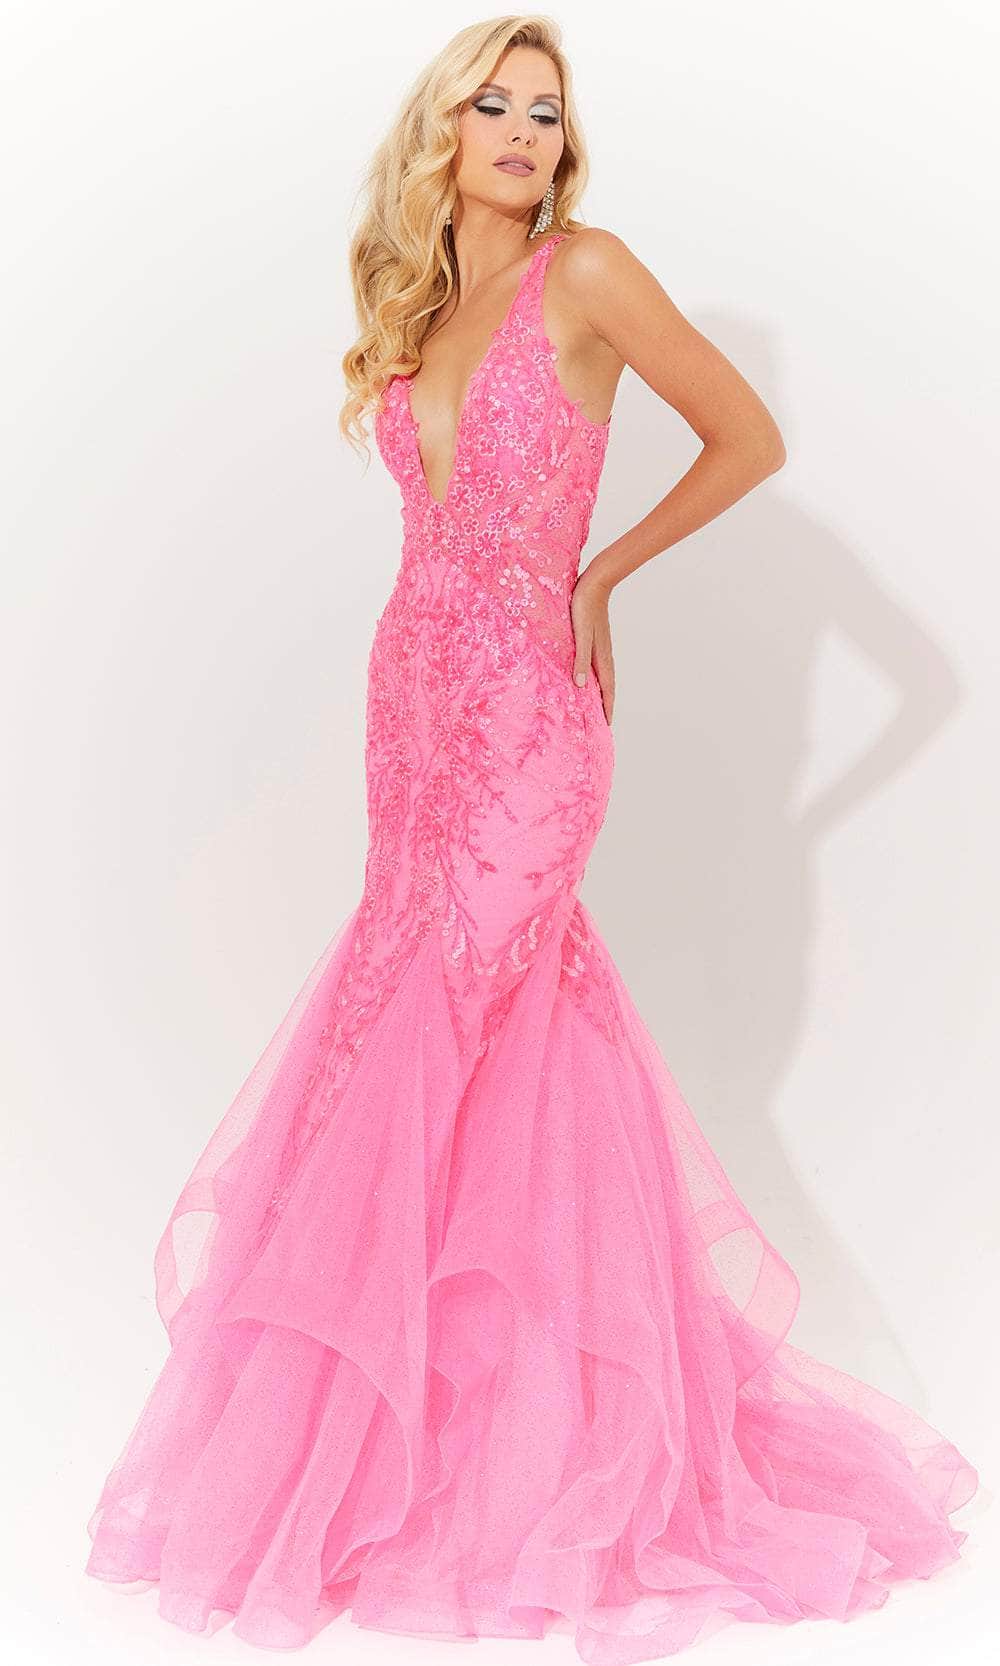 Image of Jasz Couture 7571 - Floral Applique Embellished Prom Dress